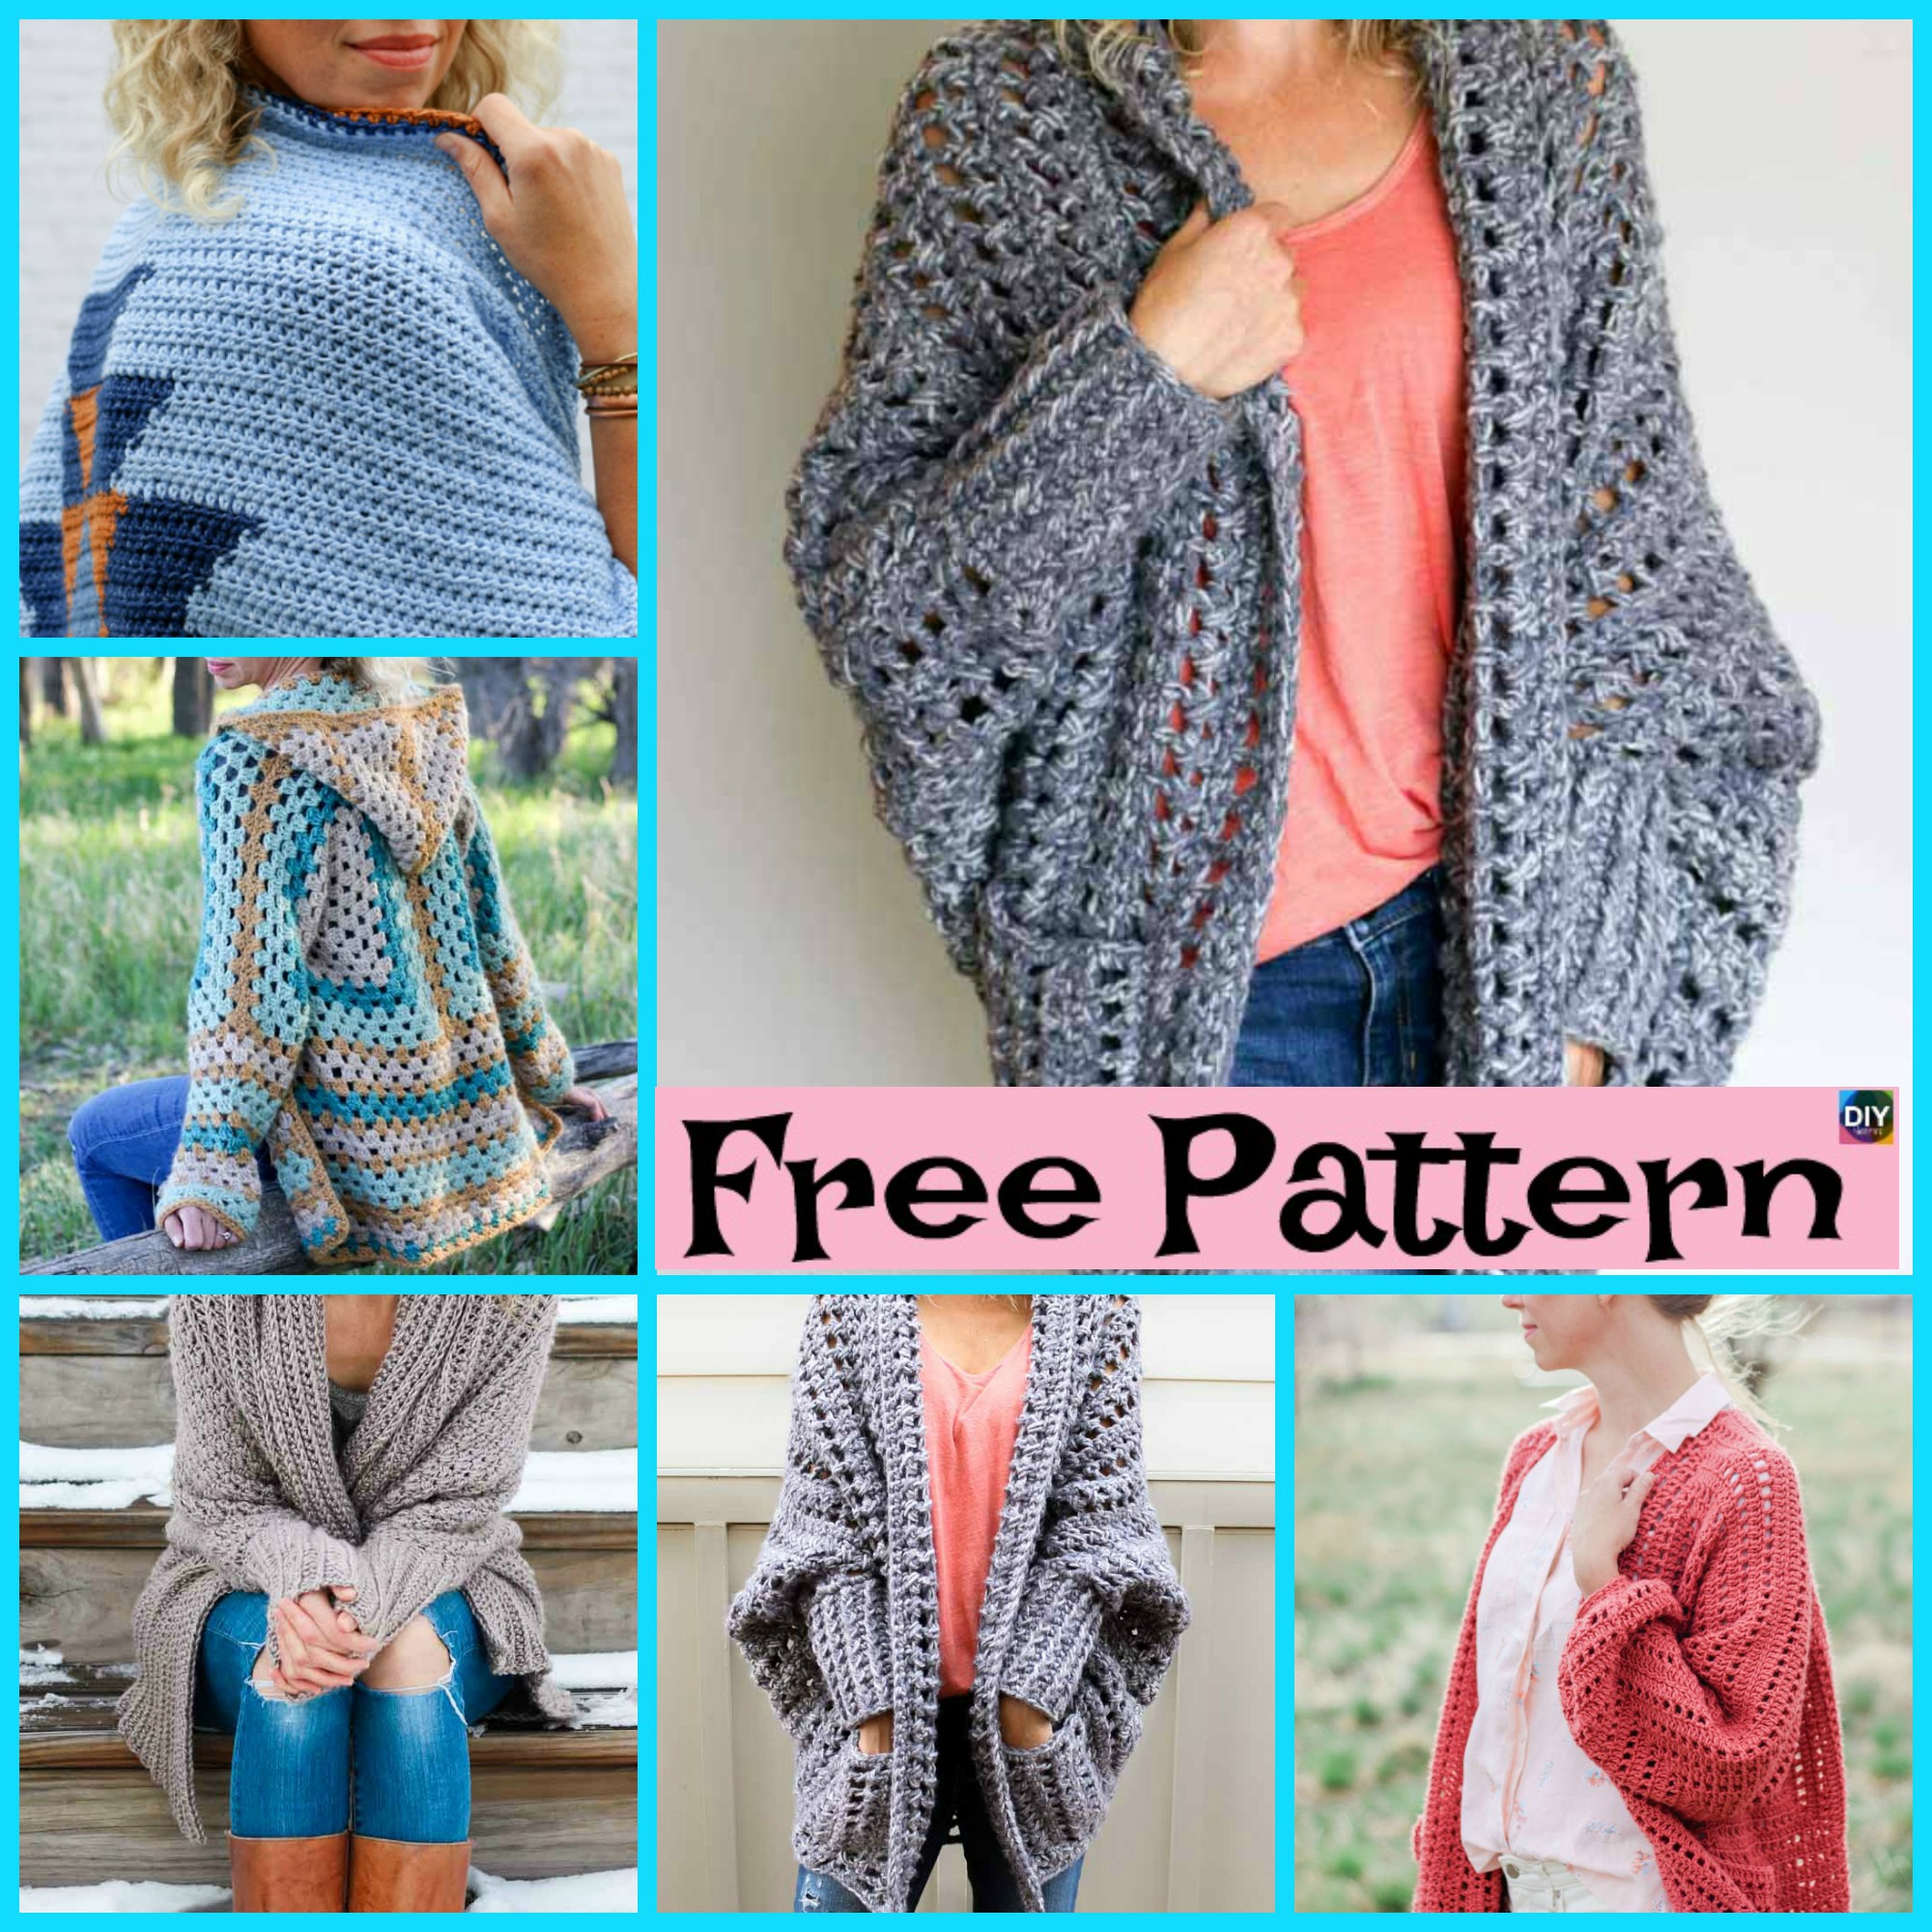 5 Beautiful Crochet Sweater Free Patterns - DIY 4 EVER